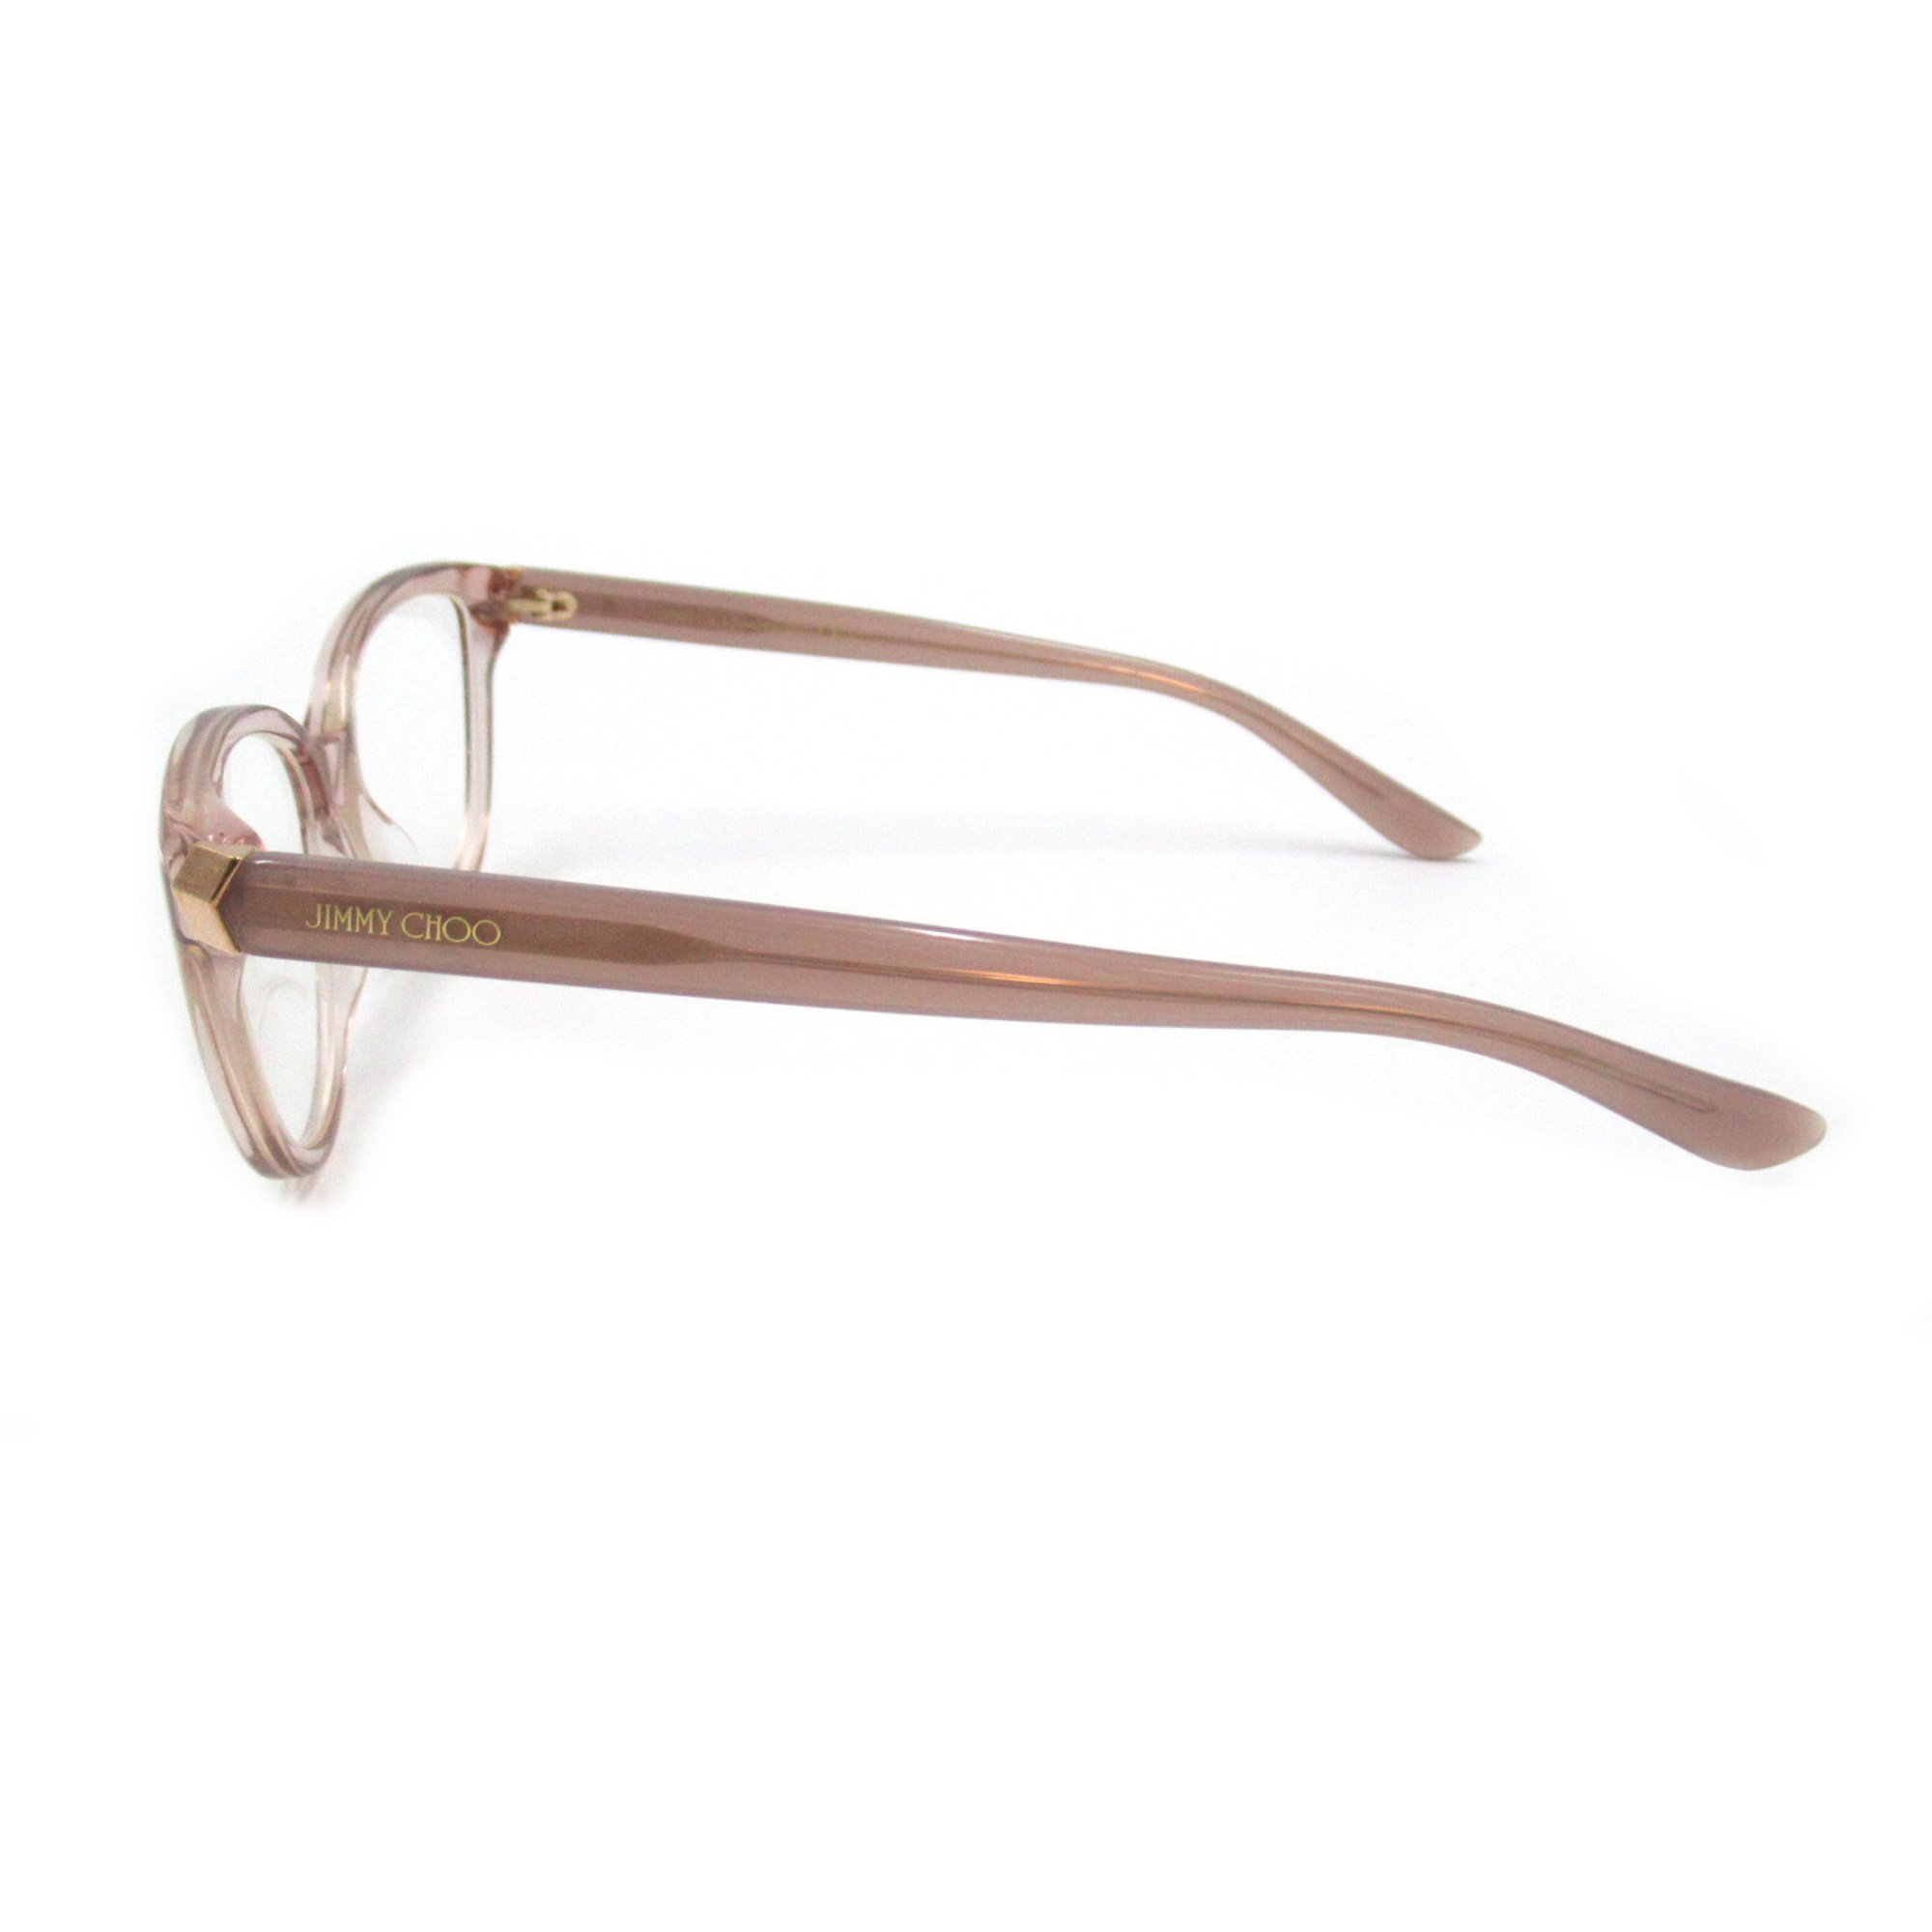 JIMMY CHOO Date Glasses Glasses Frame Beige Plastic 226 FWM(53)